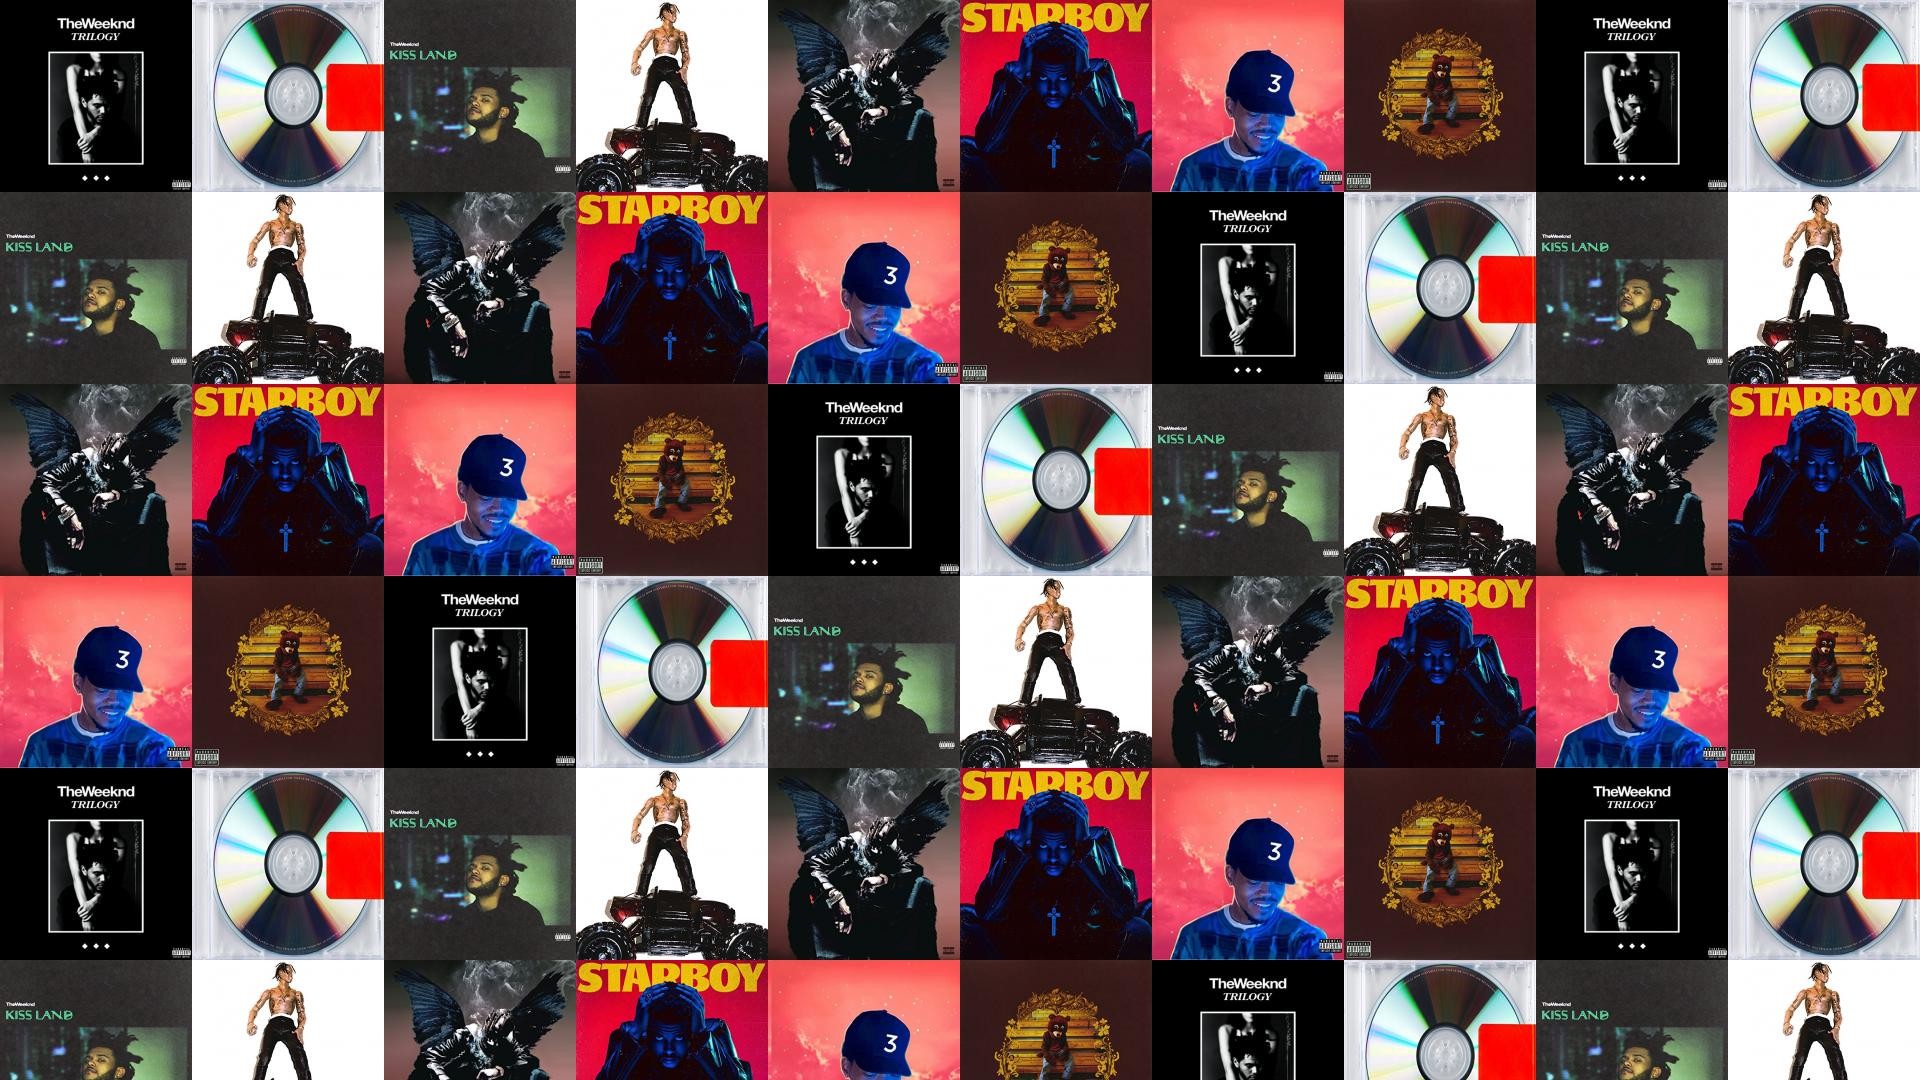 Weeknd Trilogy Kanye Yeezus Kiss Land Travis Scott - 1920x1080 Wallpaper -  